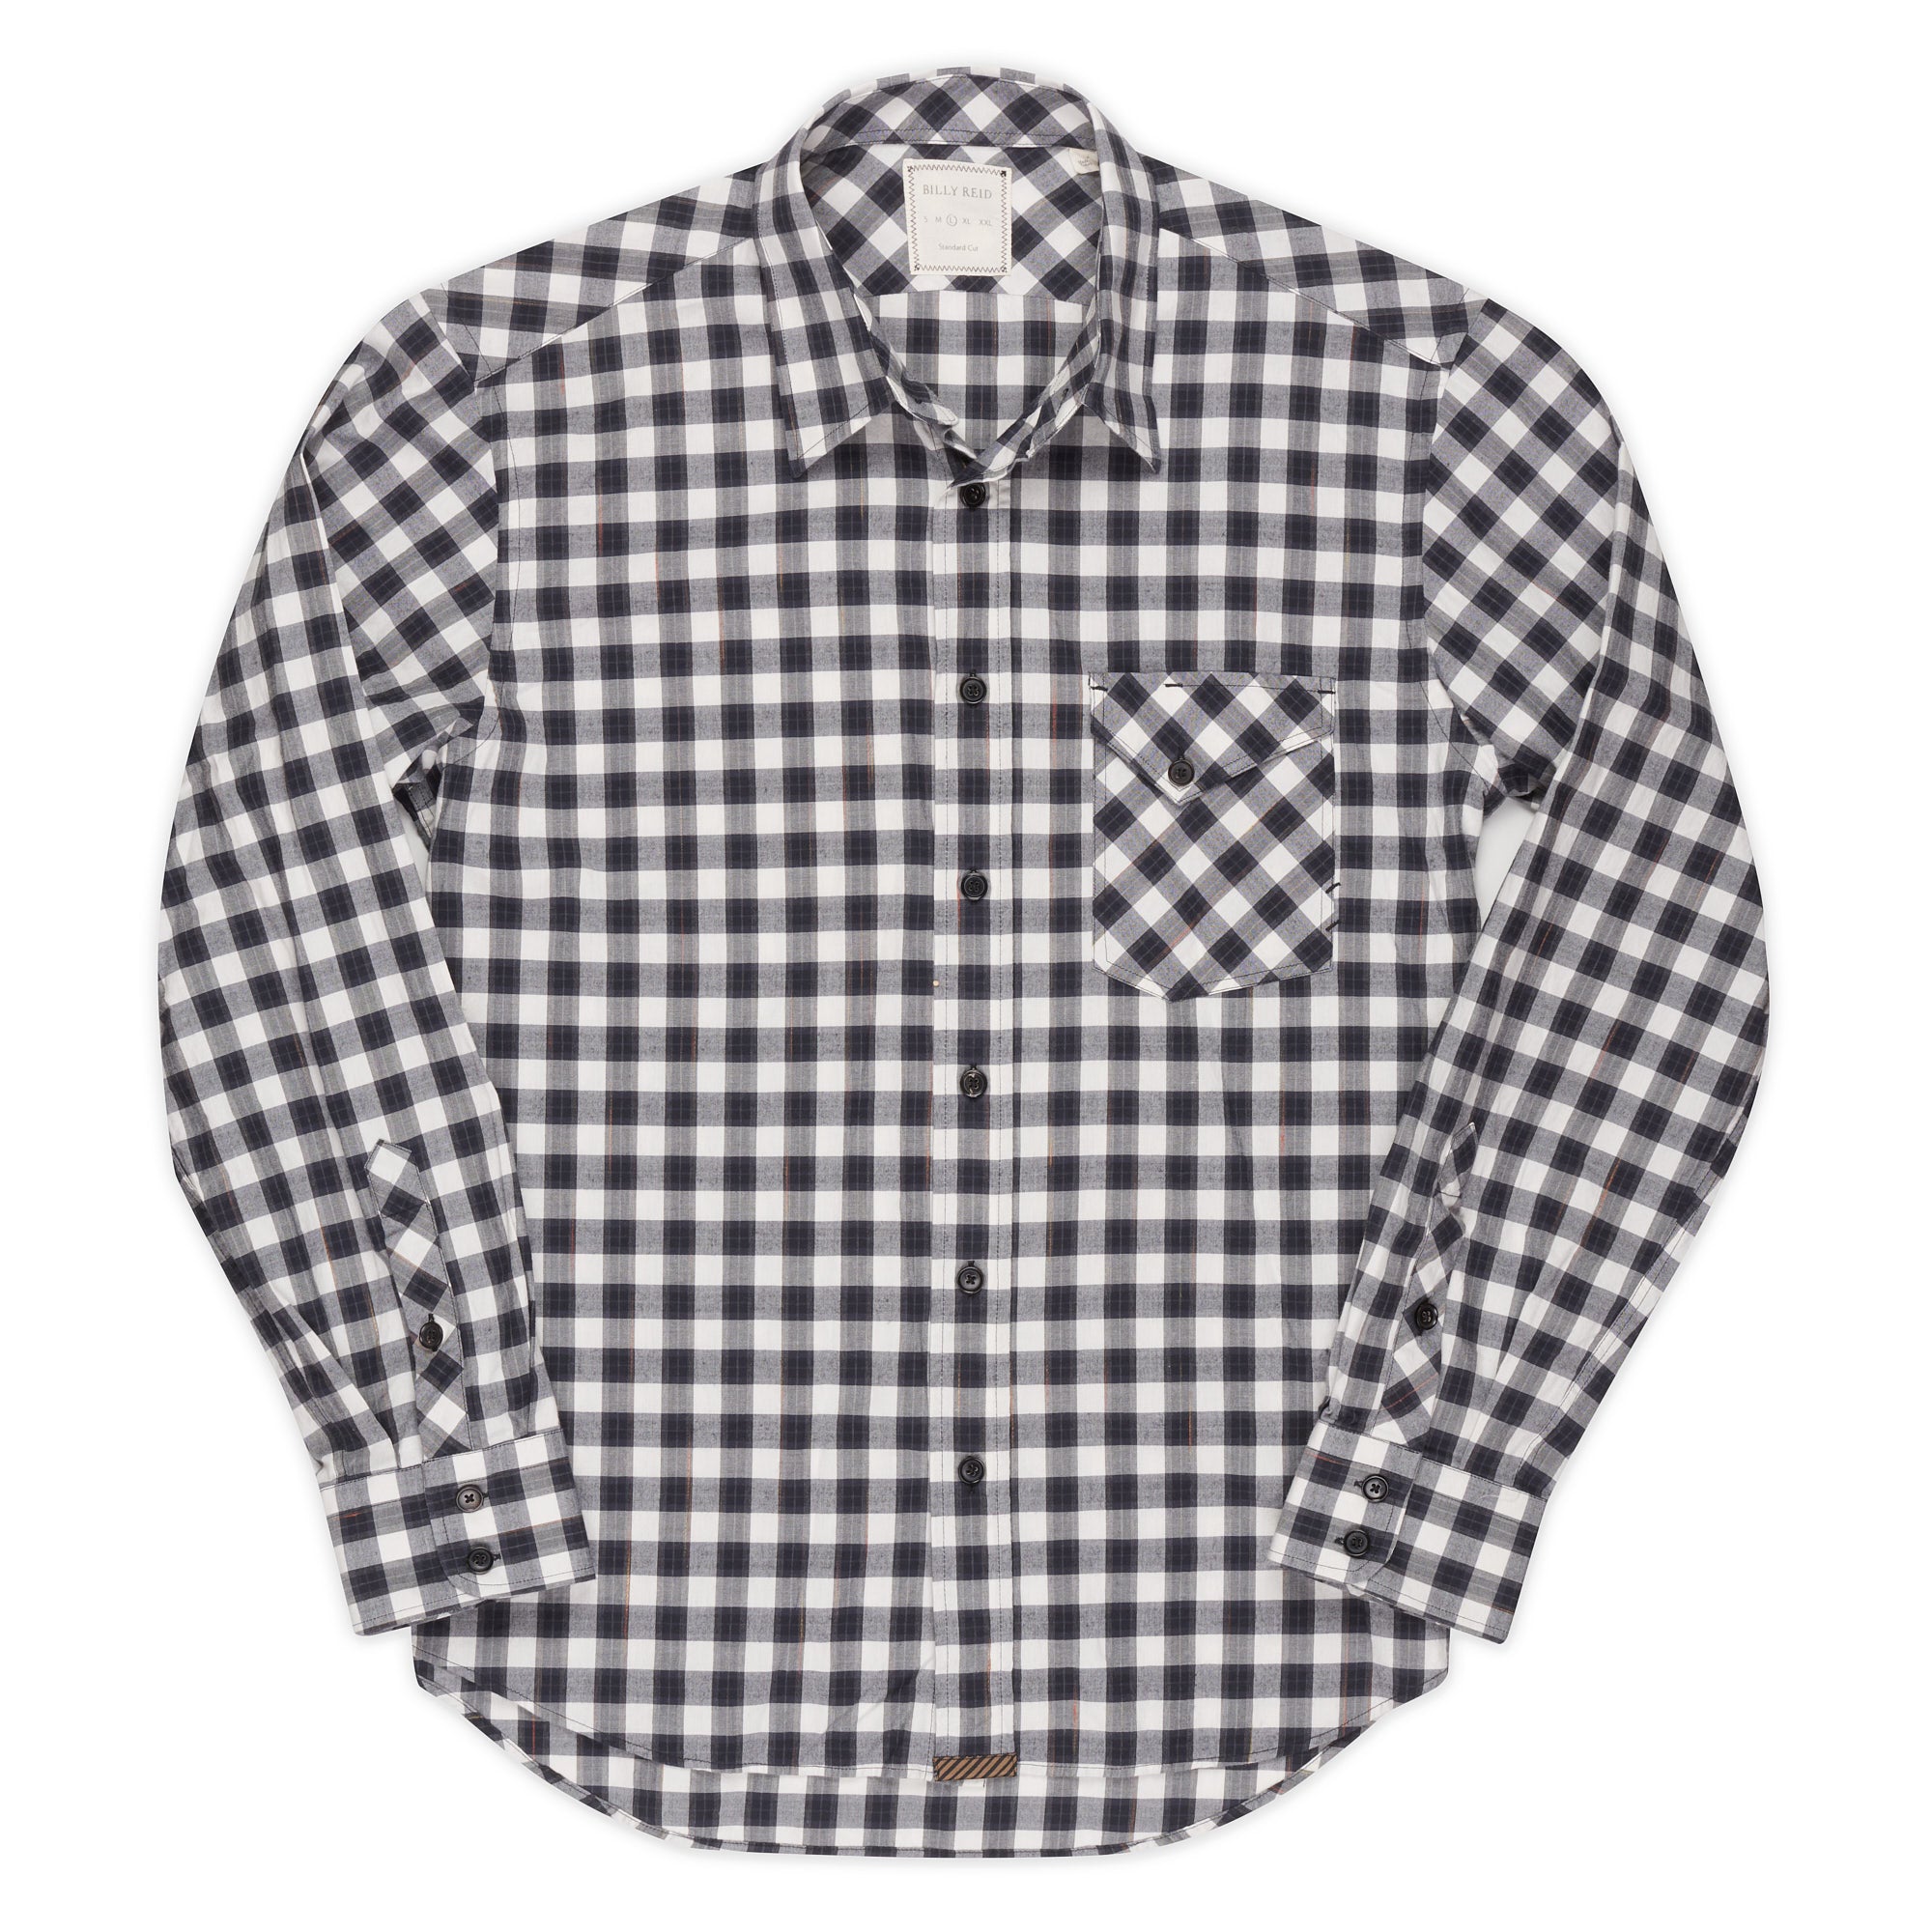 BILLY REID Gray-White Plaid Cotton Casual Shirt NEW US L Standard Cut